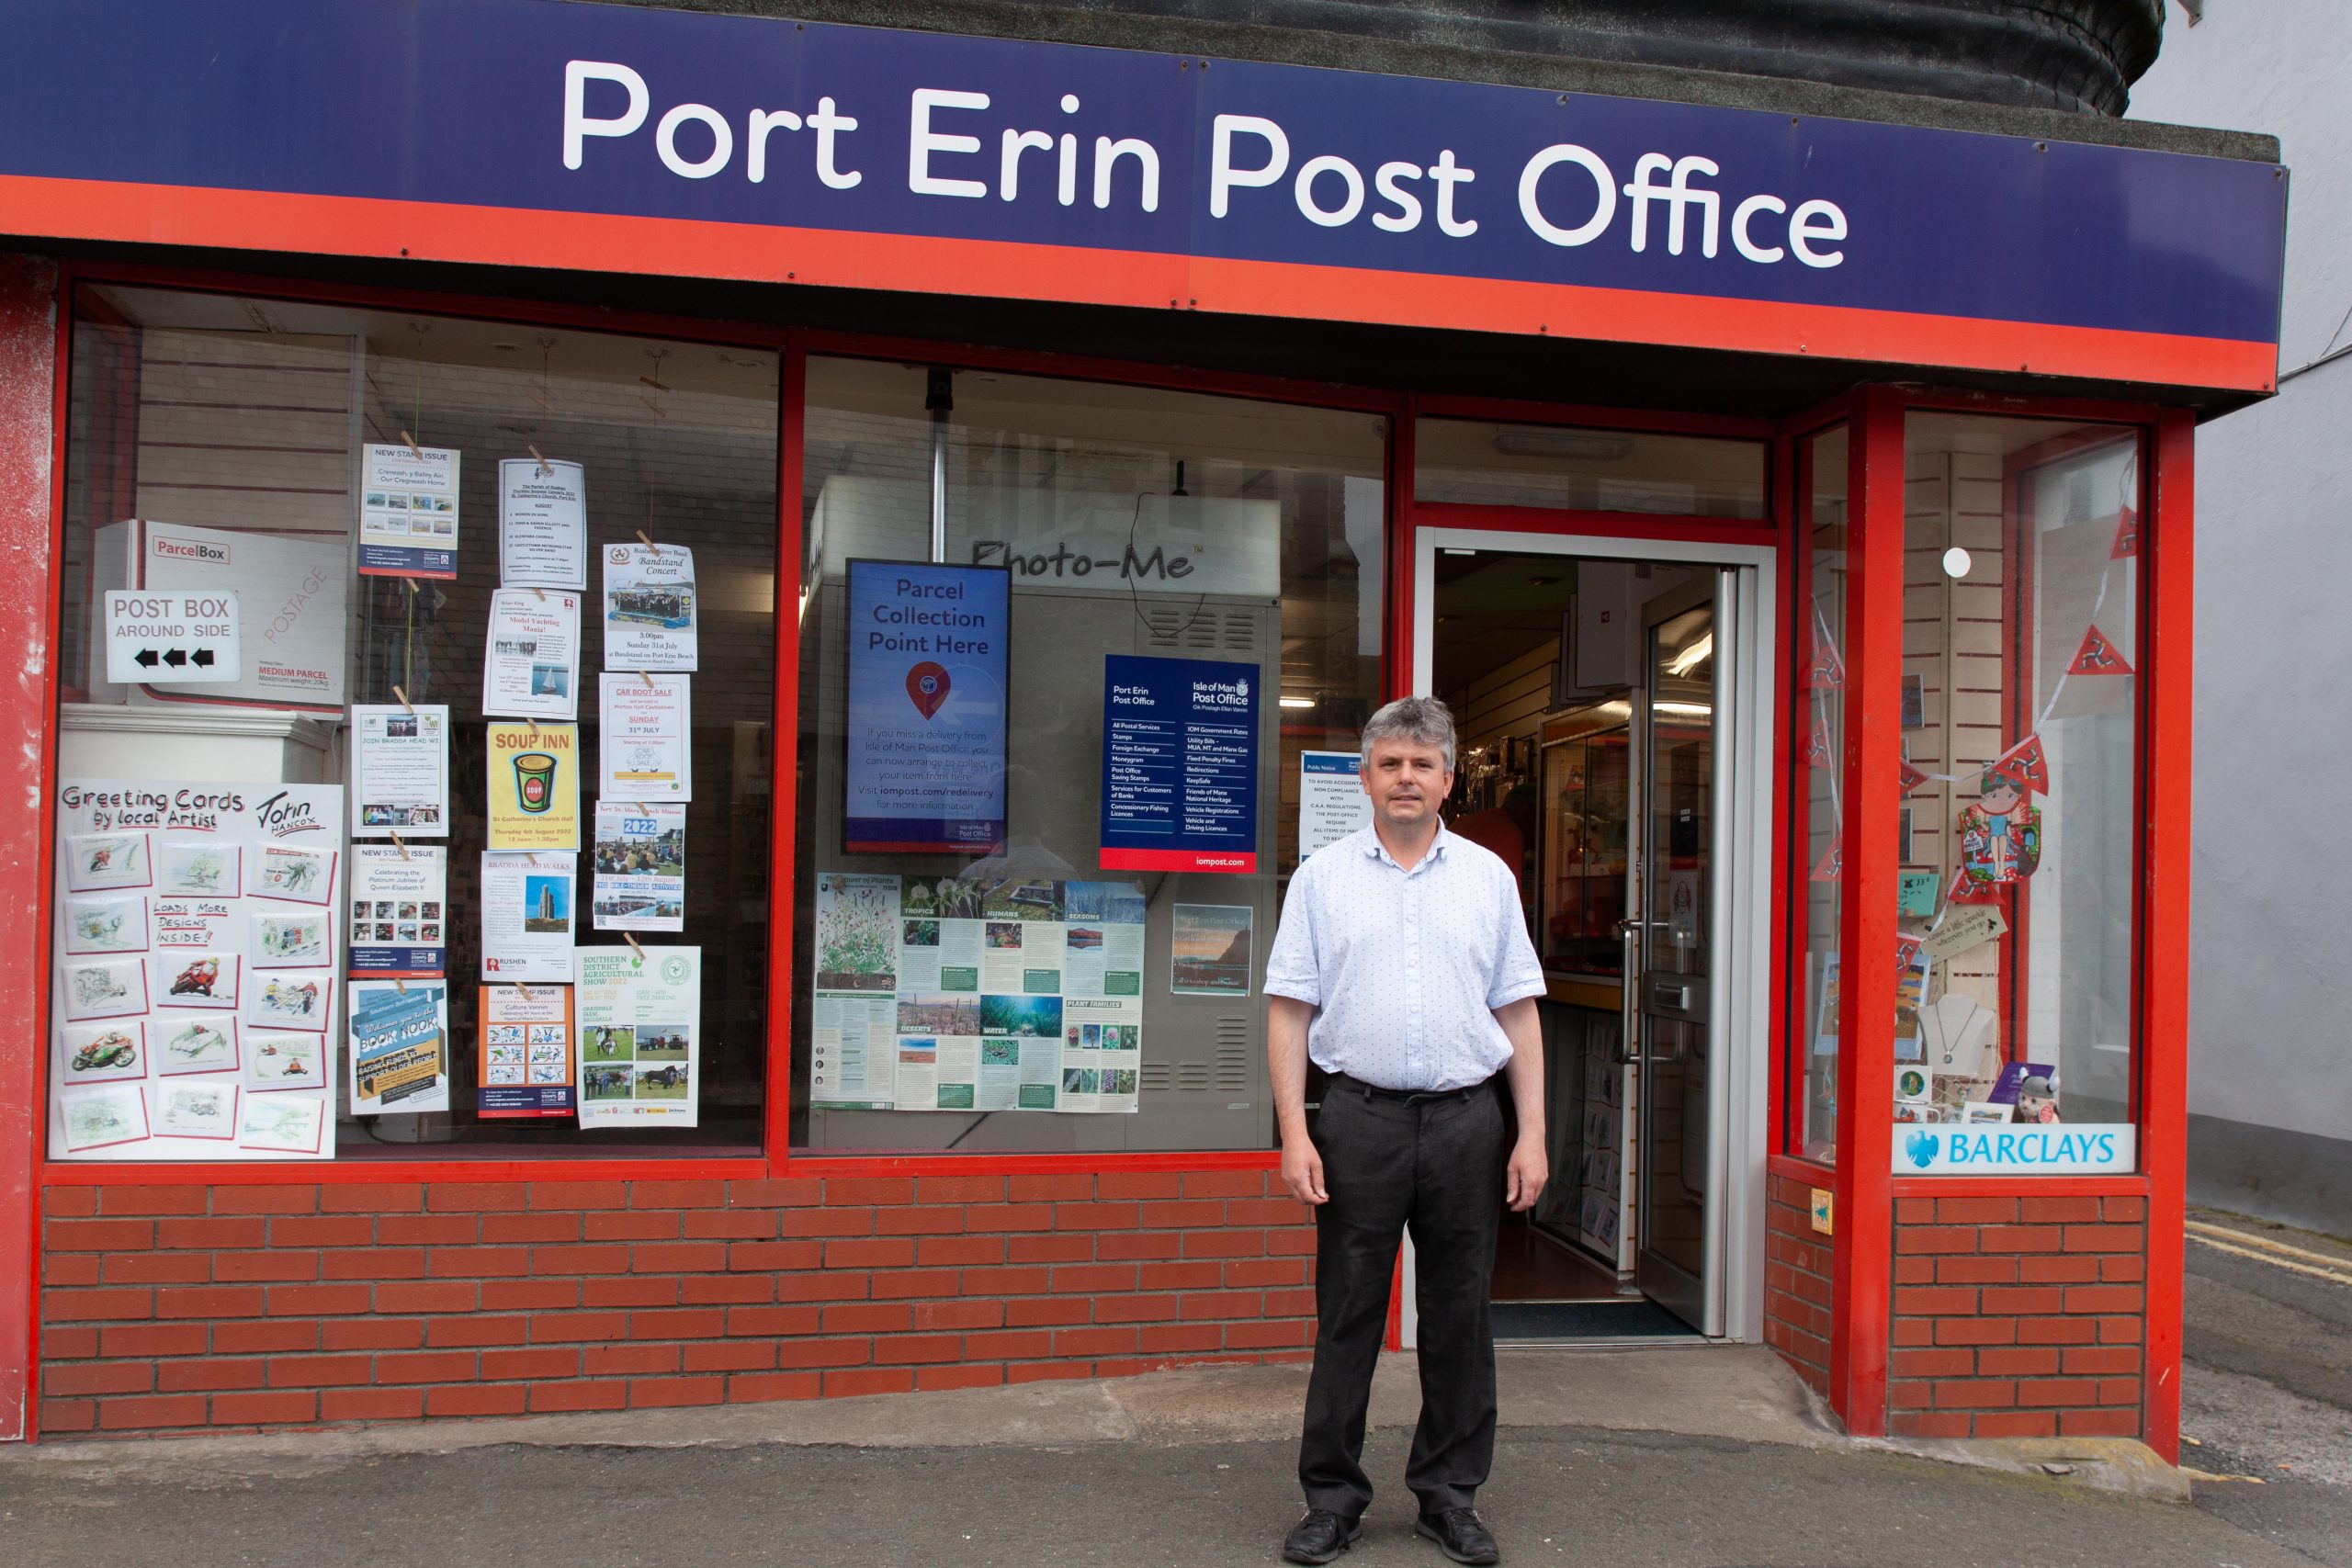 Port Erin Post Office 8 Church Road Port Erin IM9 6AQ